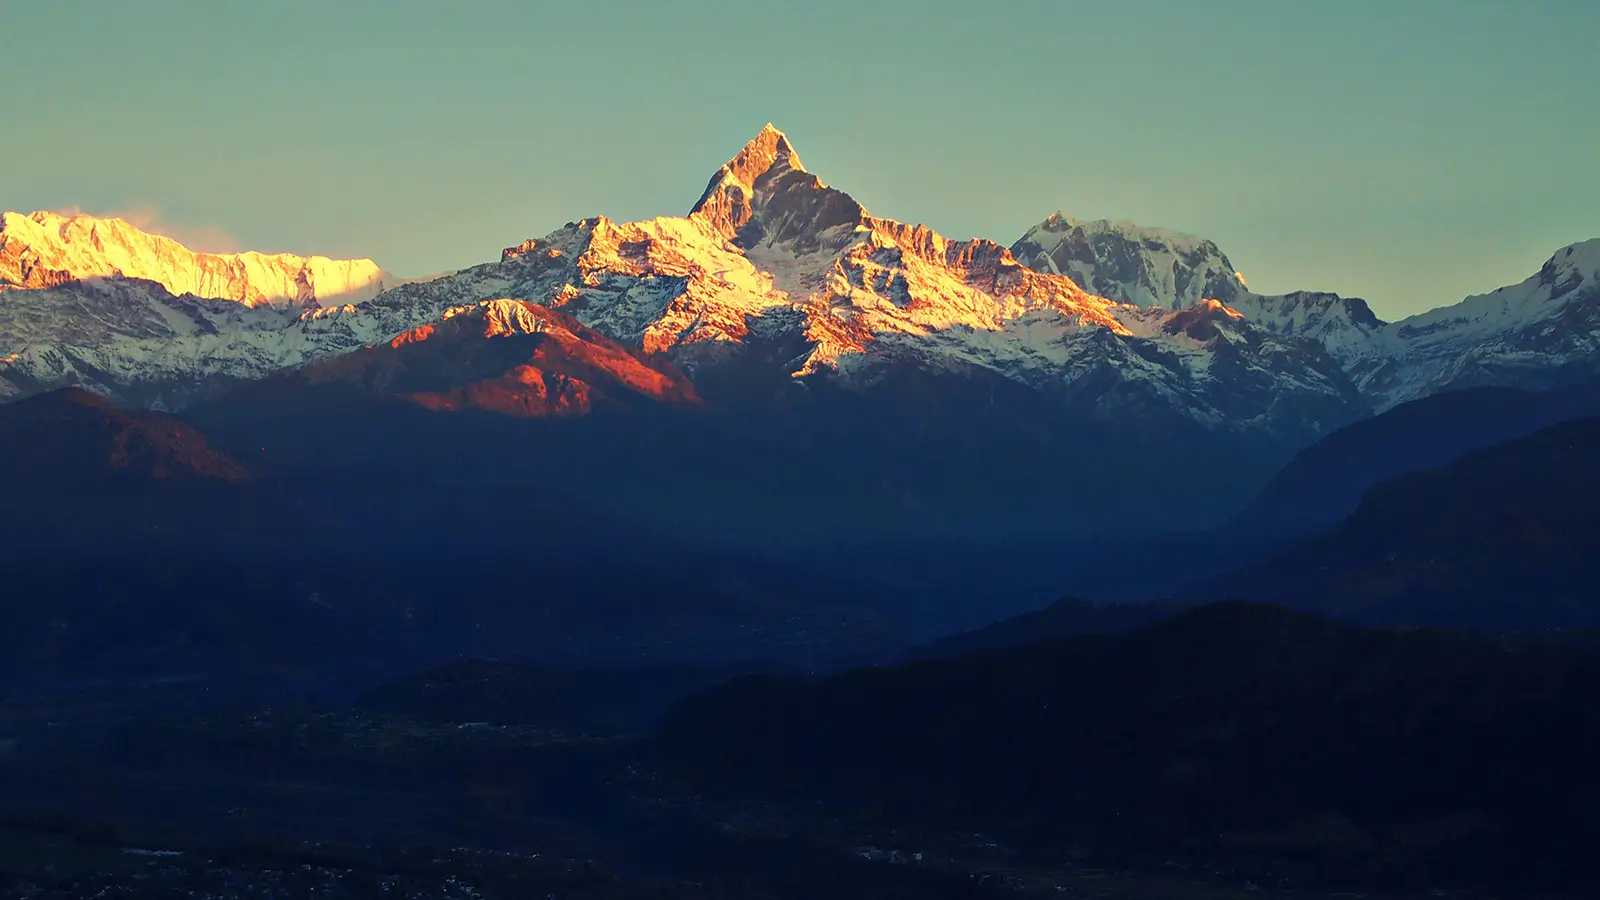 9 Best Nepal Trekking Tours